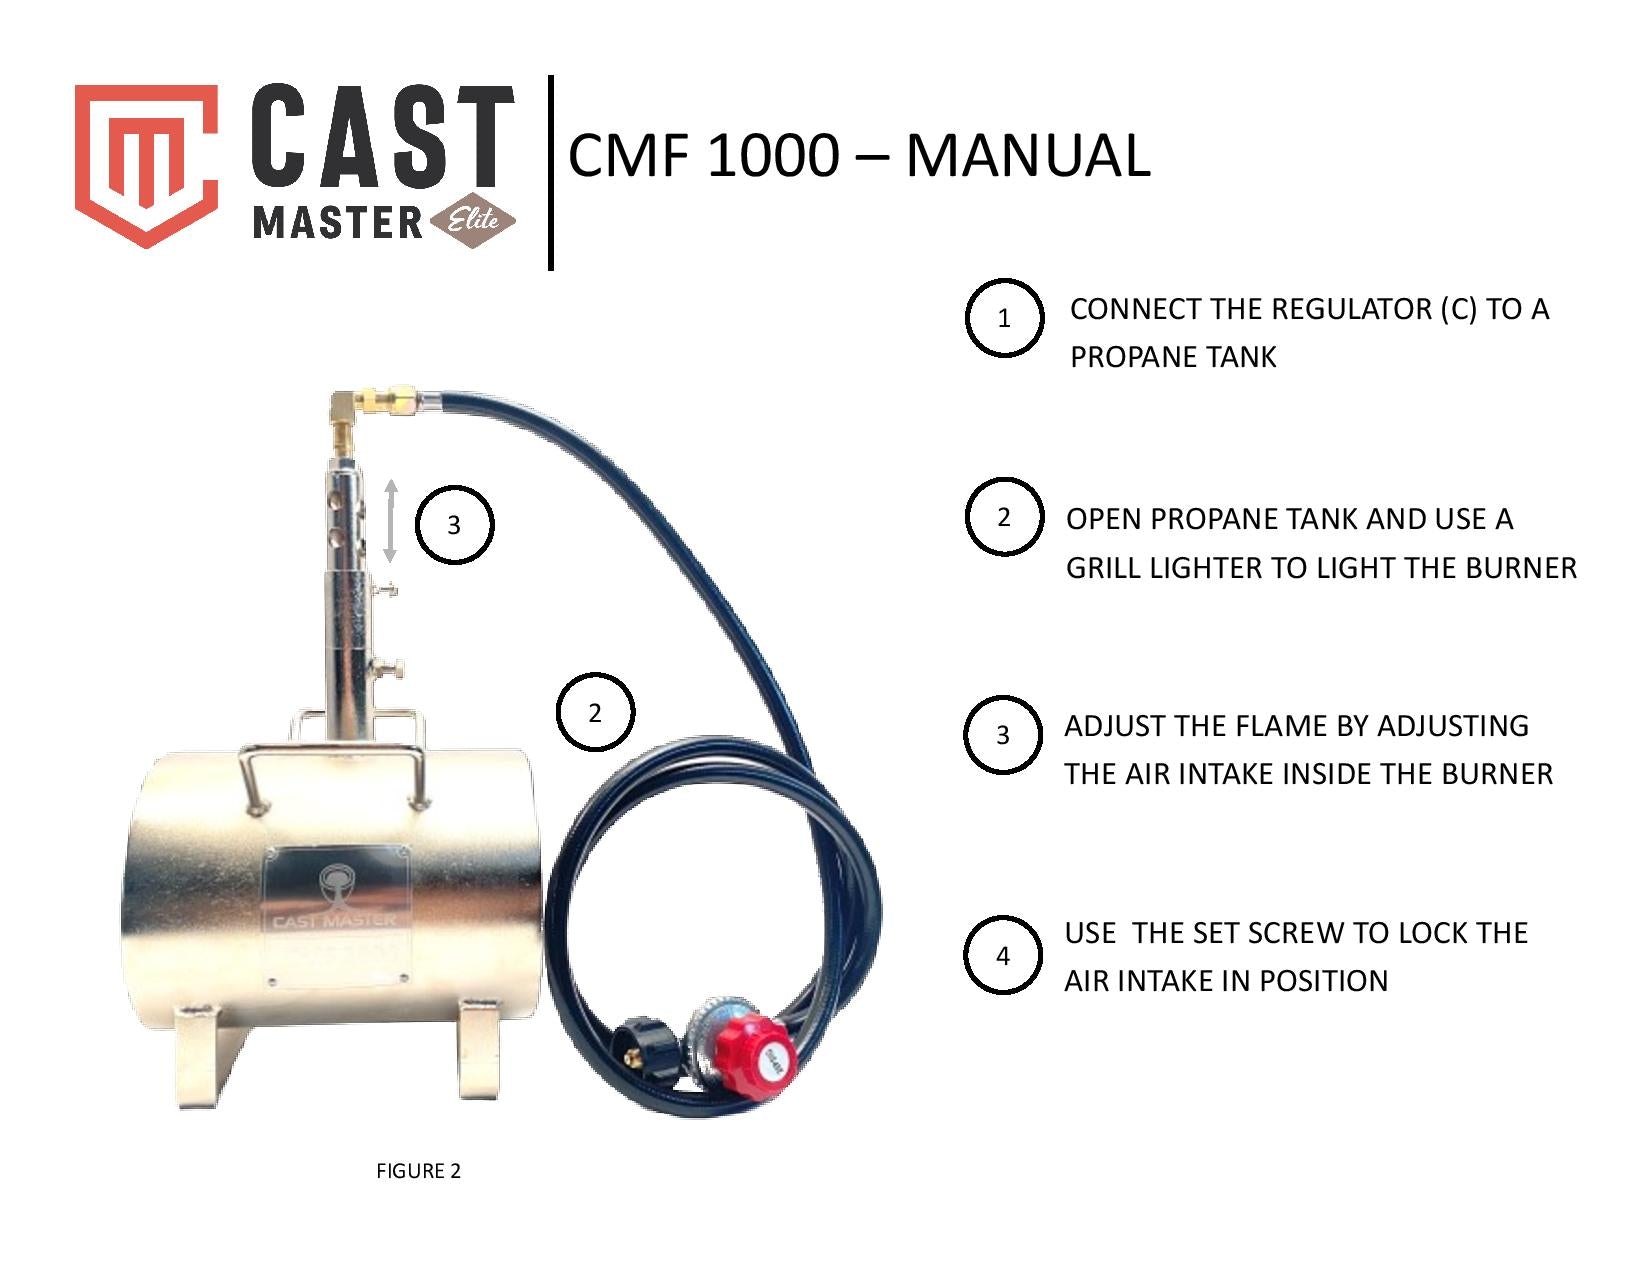 CMF 1000 Single Burner Propane Forge for Blacksmith Jewelry